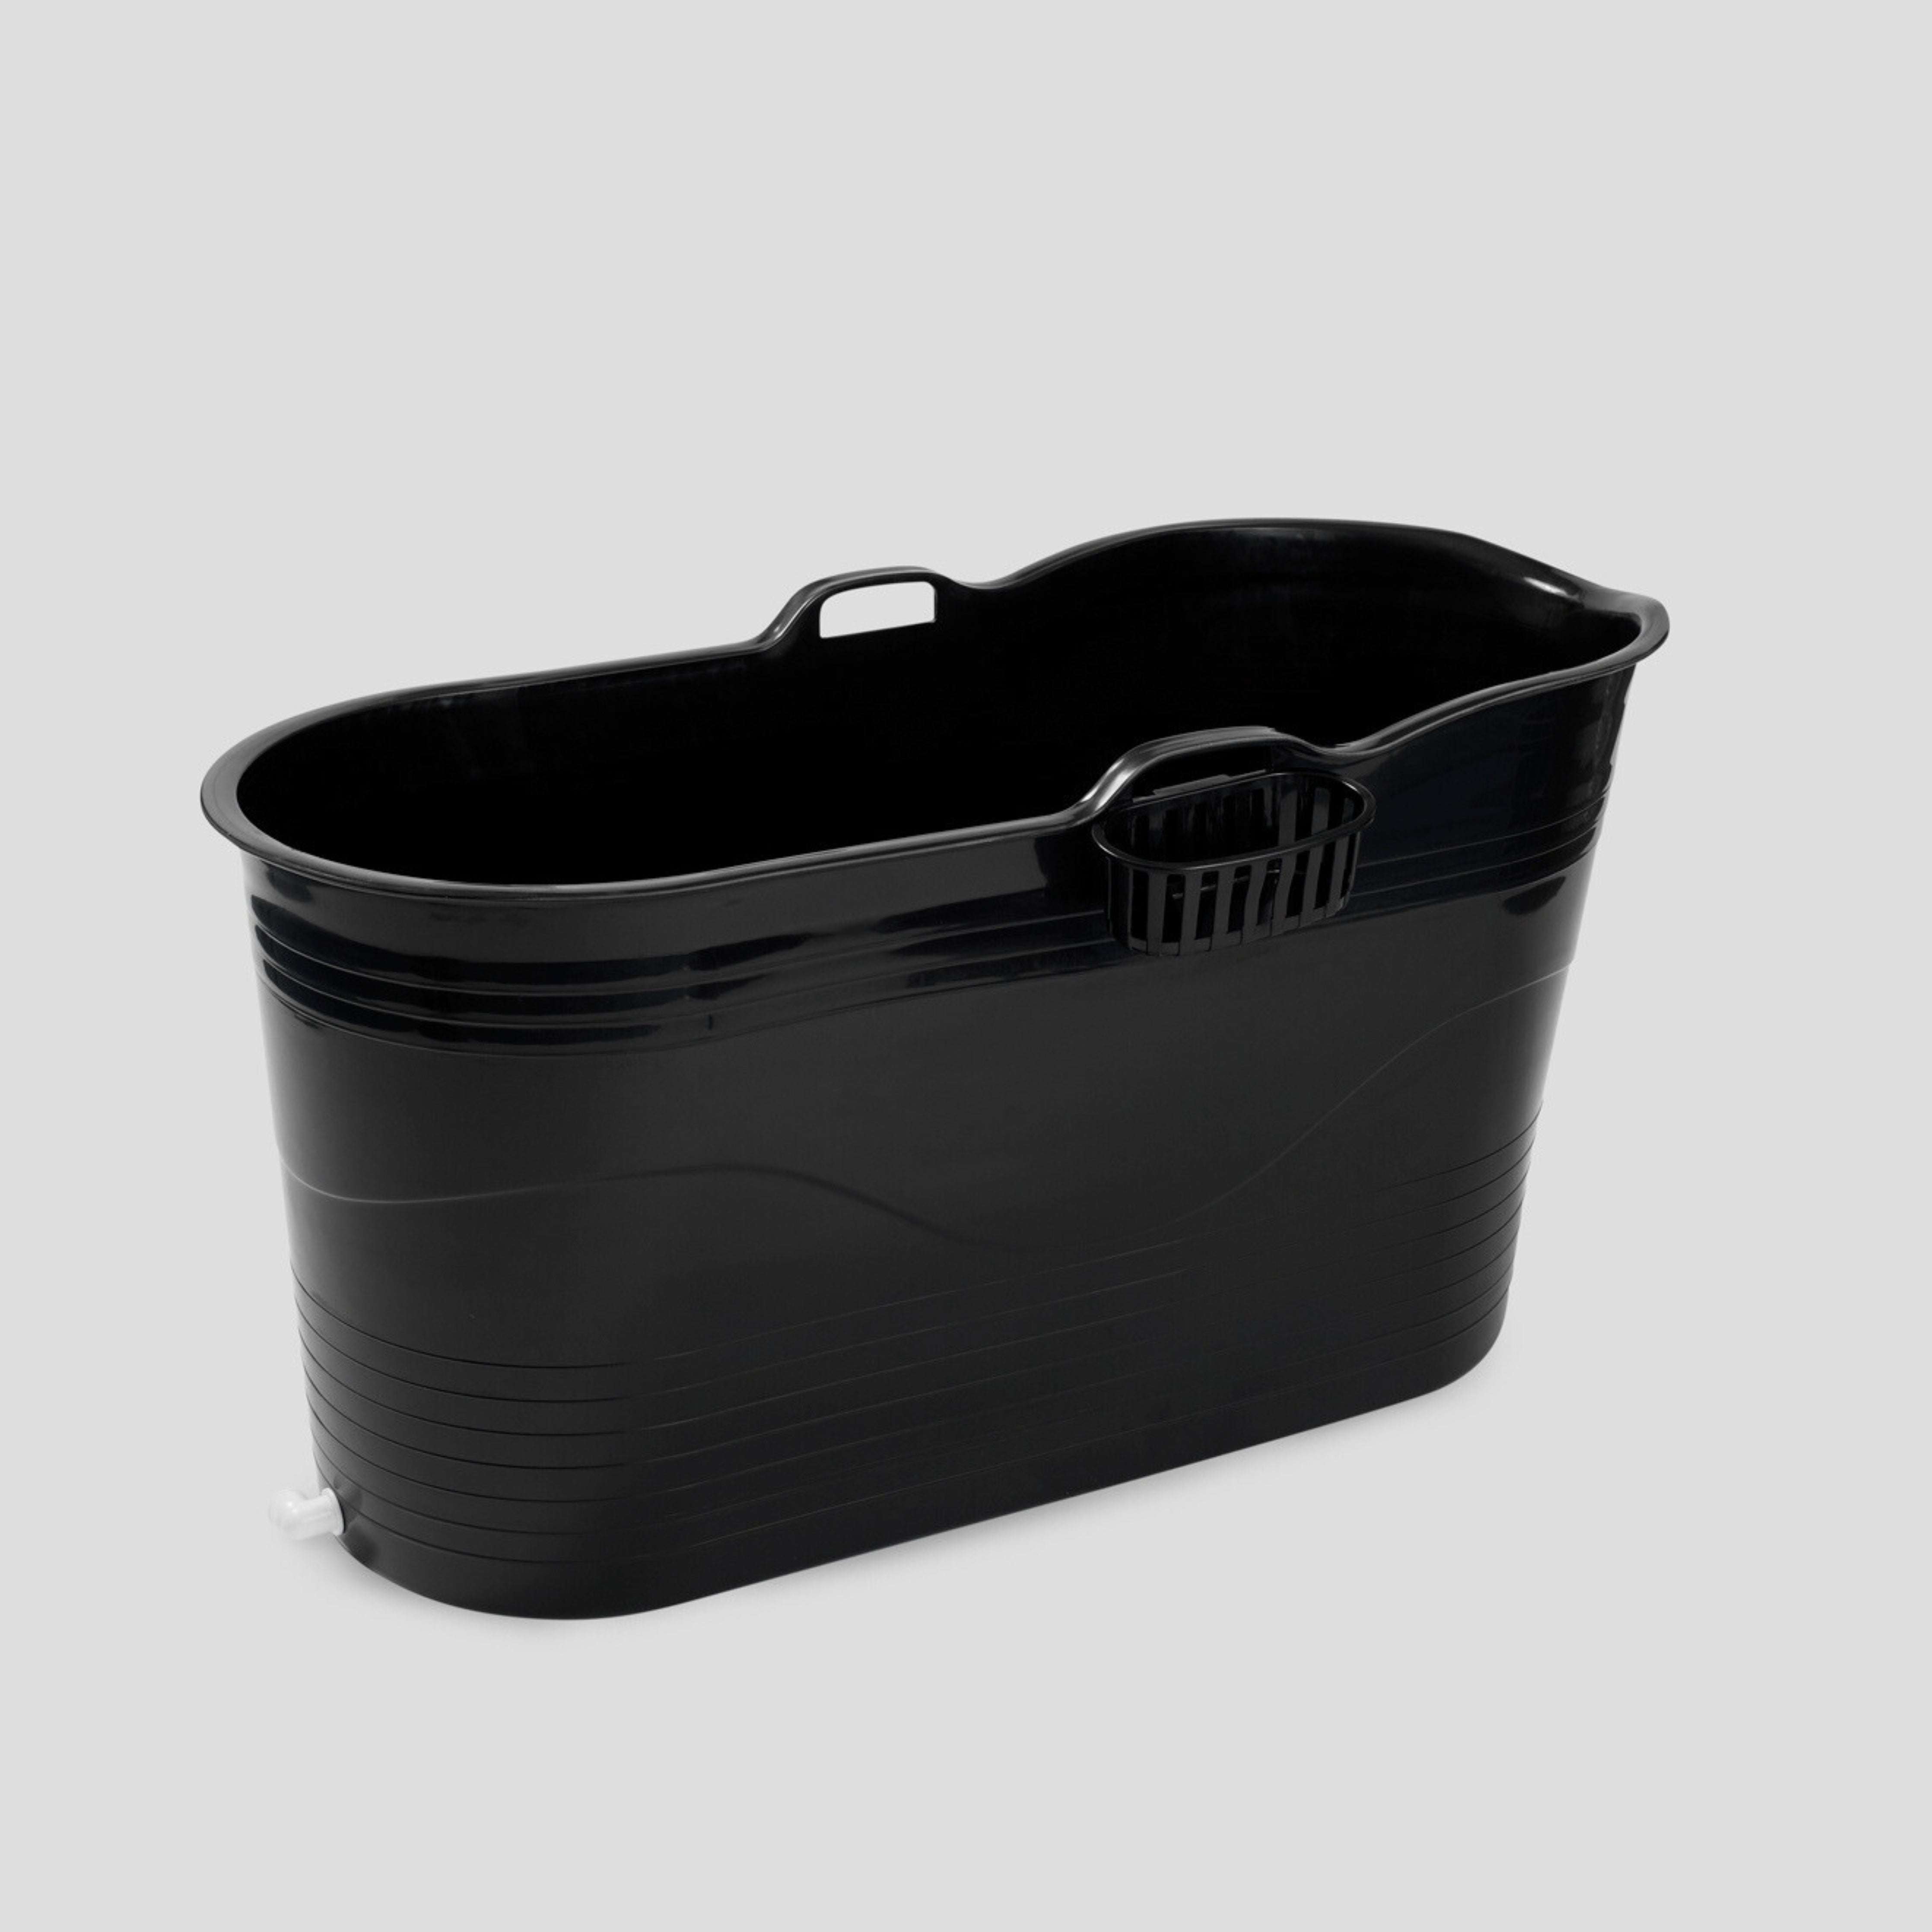 Isbad - XL - 123cm - sort - Ekstra kraftig plast og forbedret siddekomfort - Tubfamily® - Badeshop